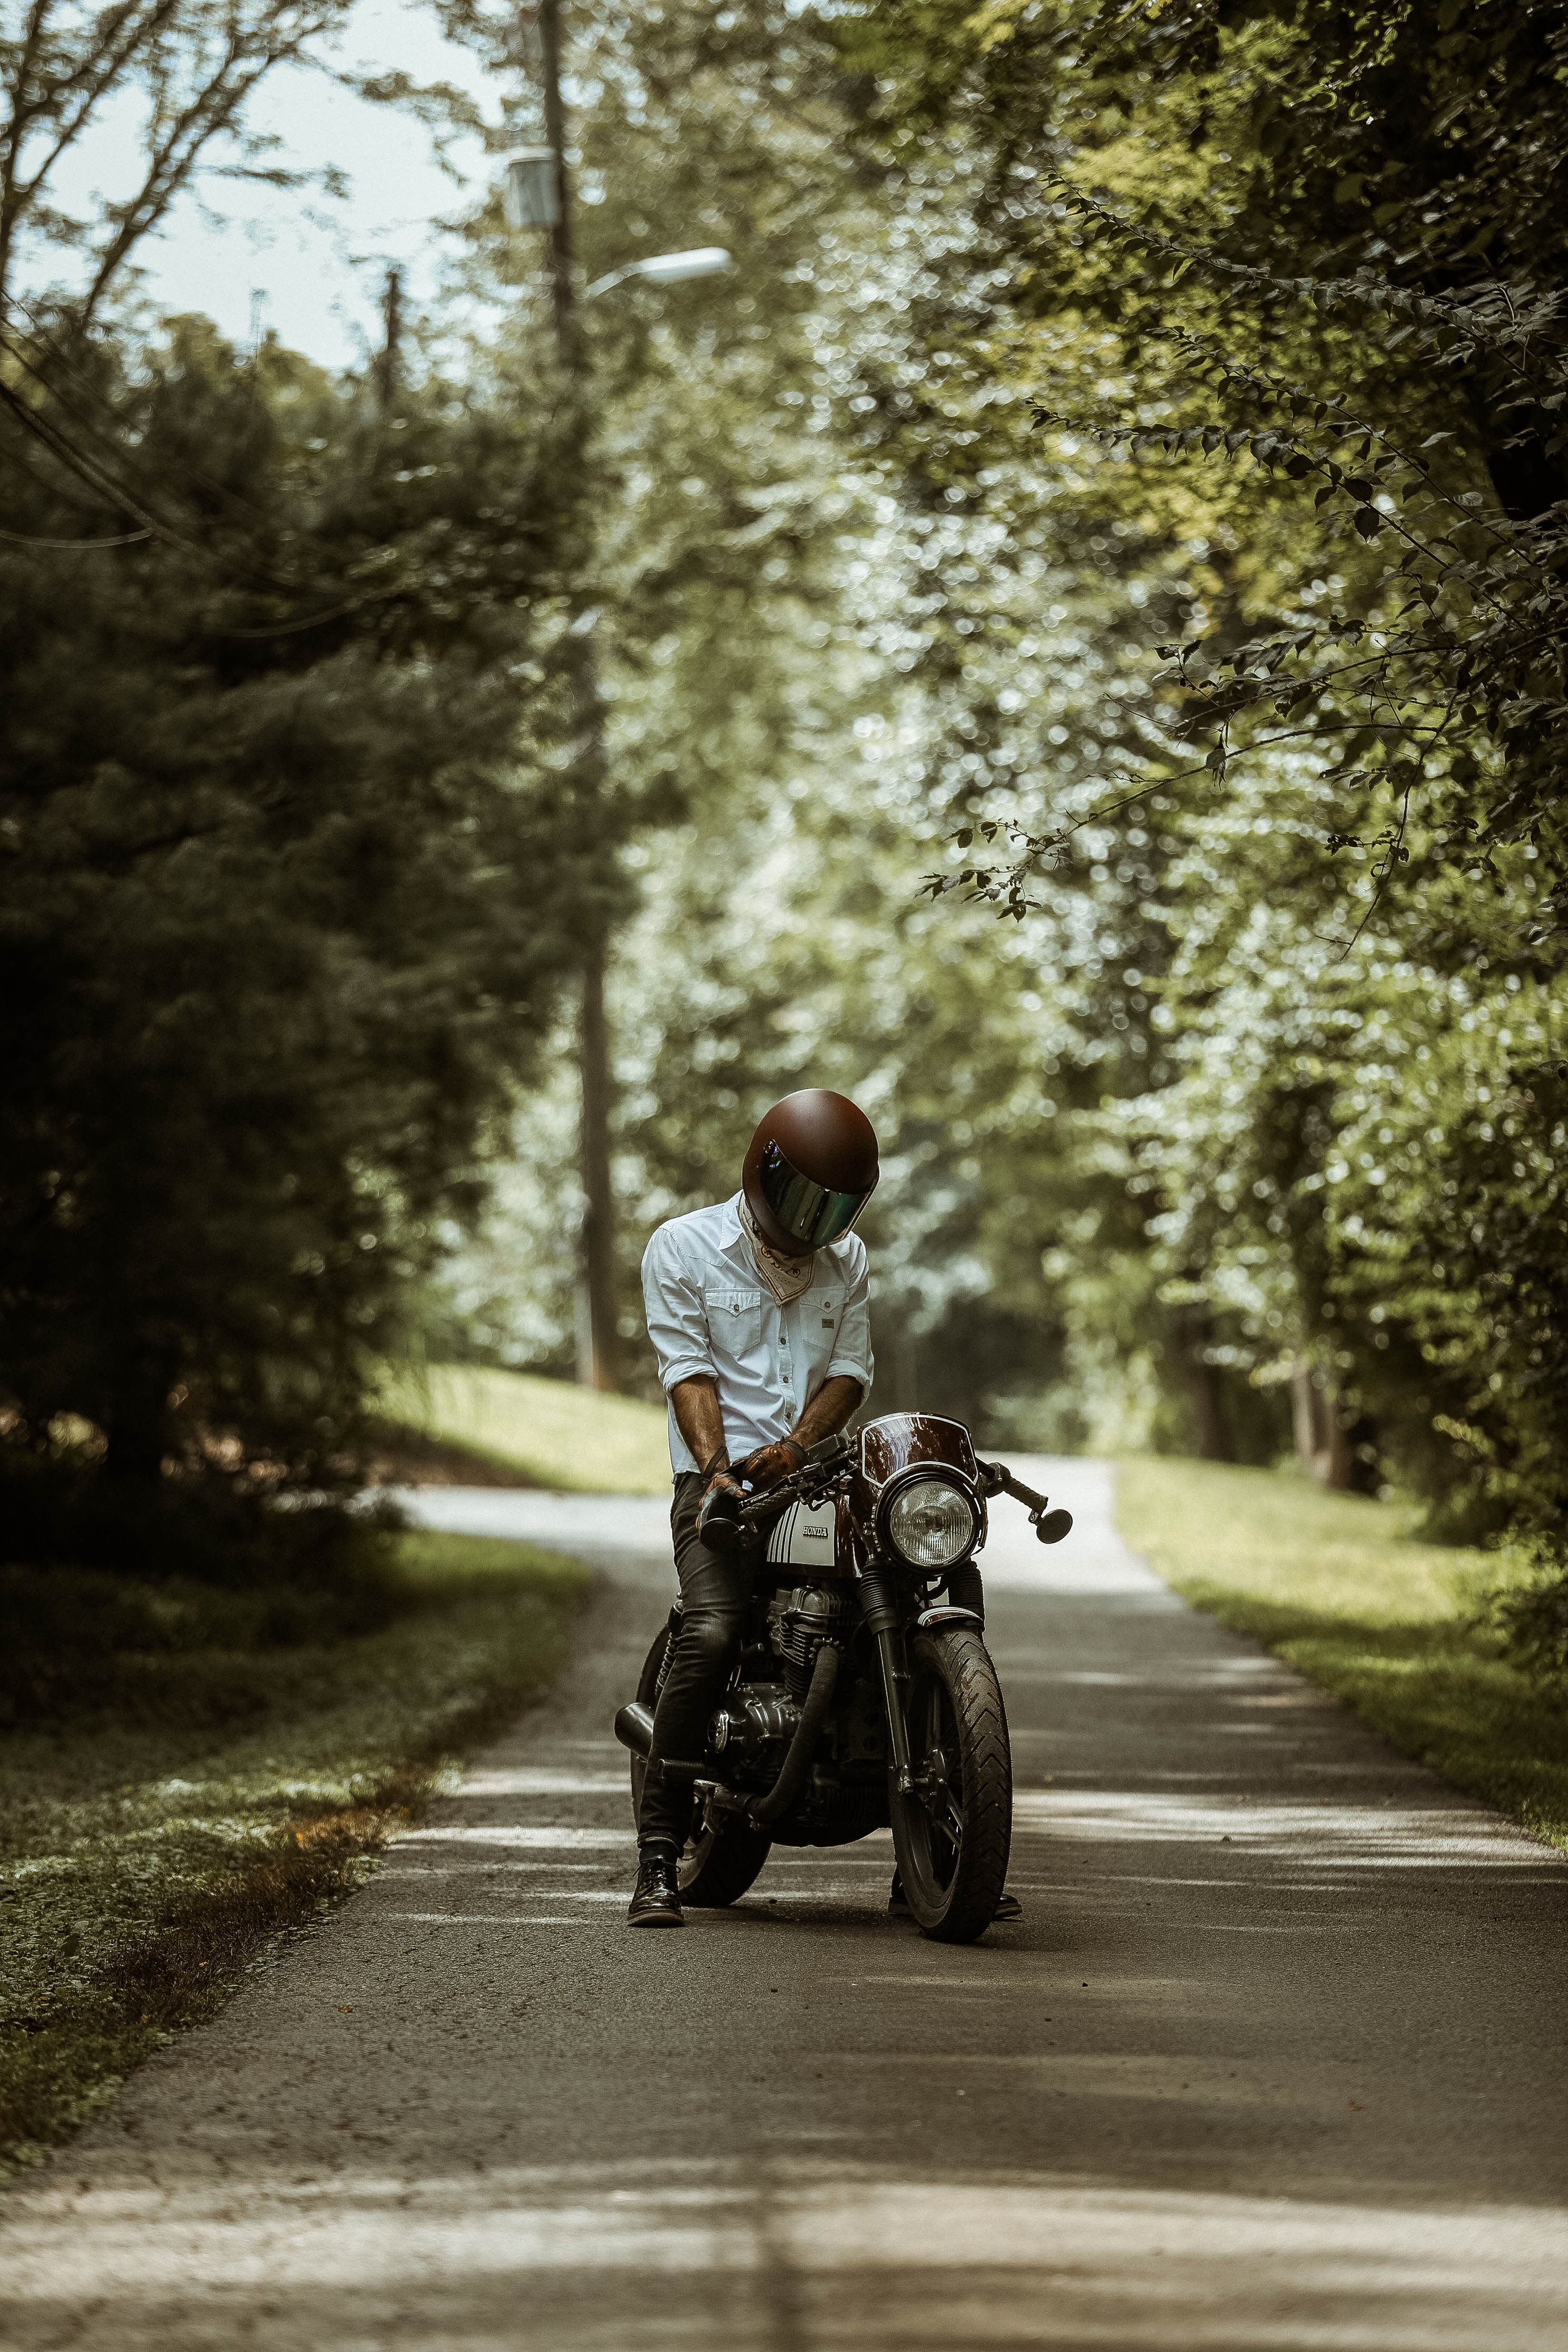 summer, motorcycles, road, motorcyclist, helmet, motorcycle